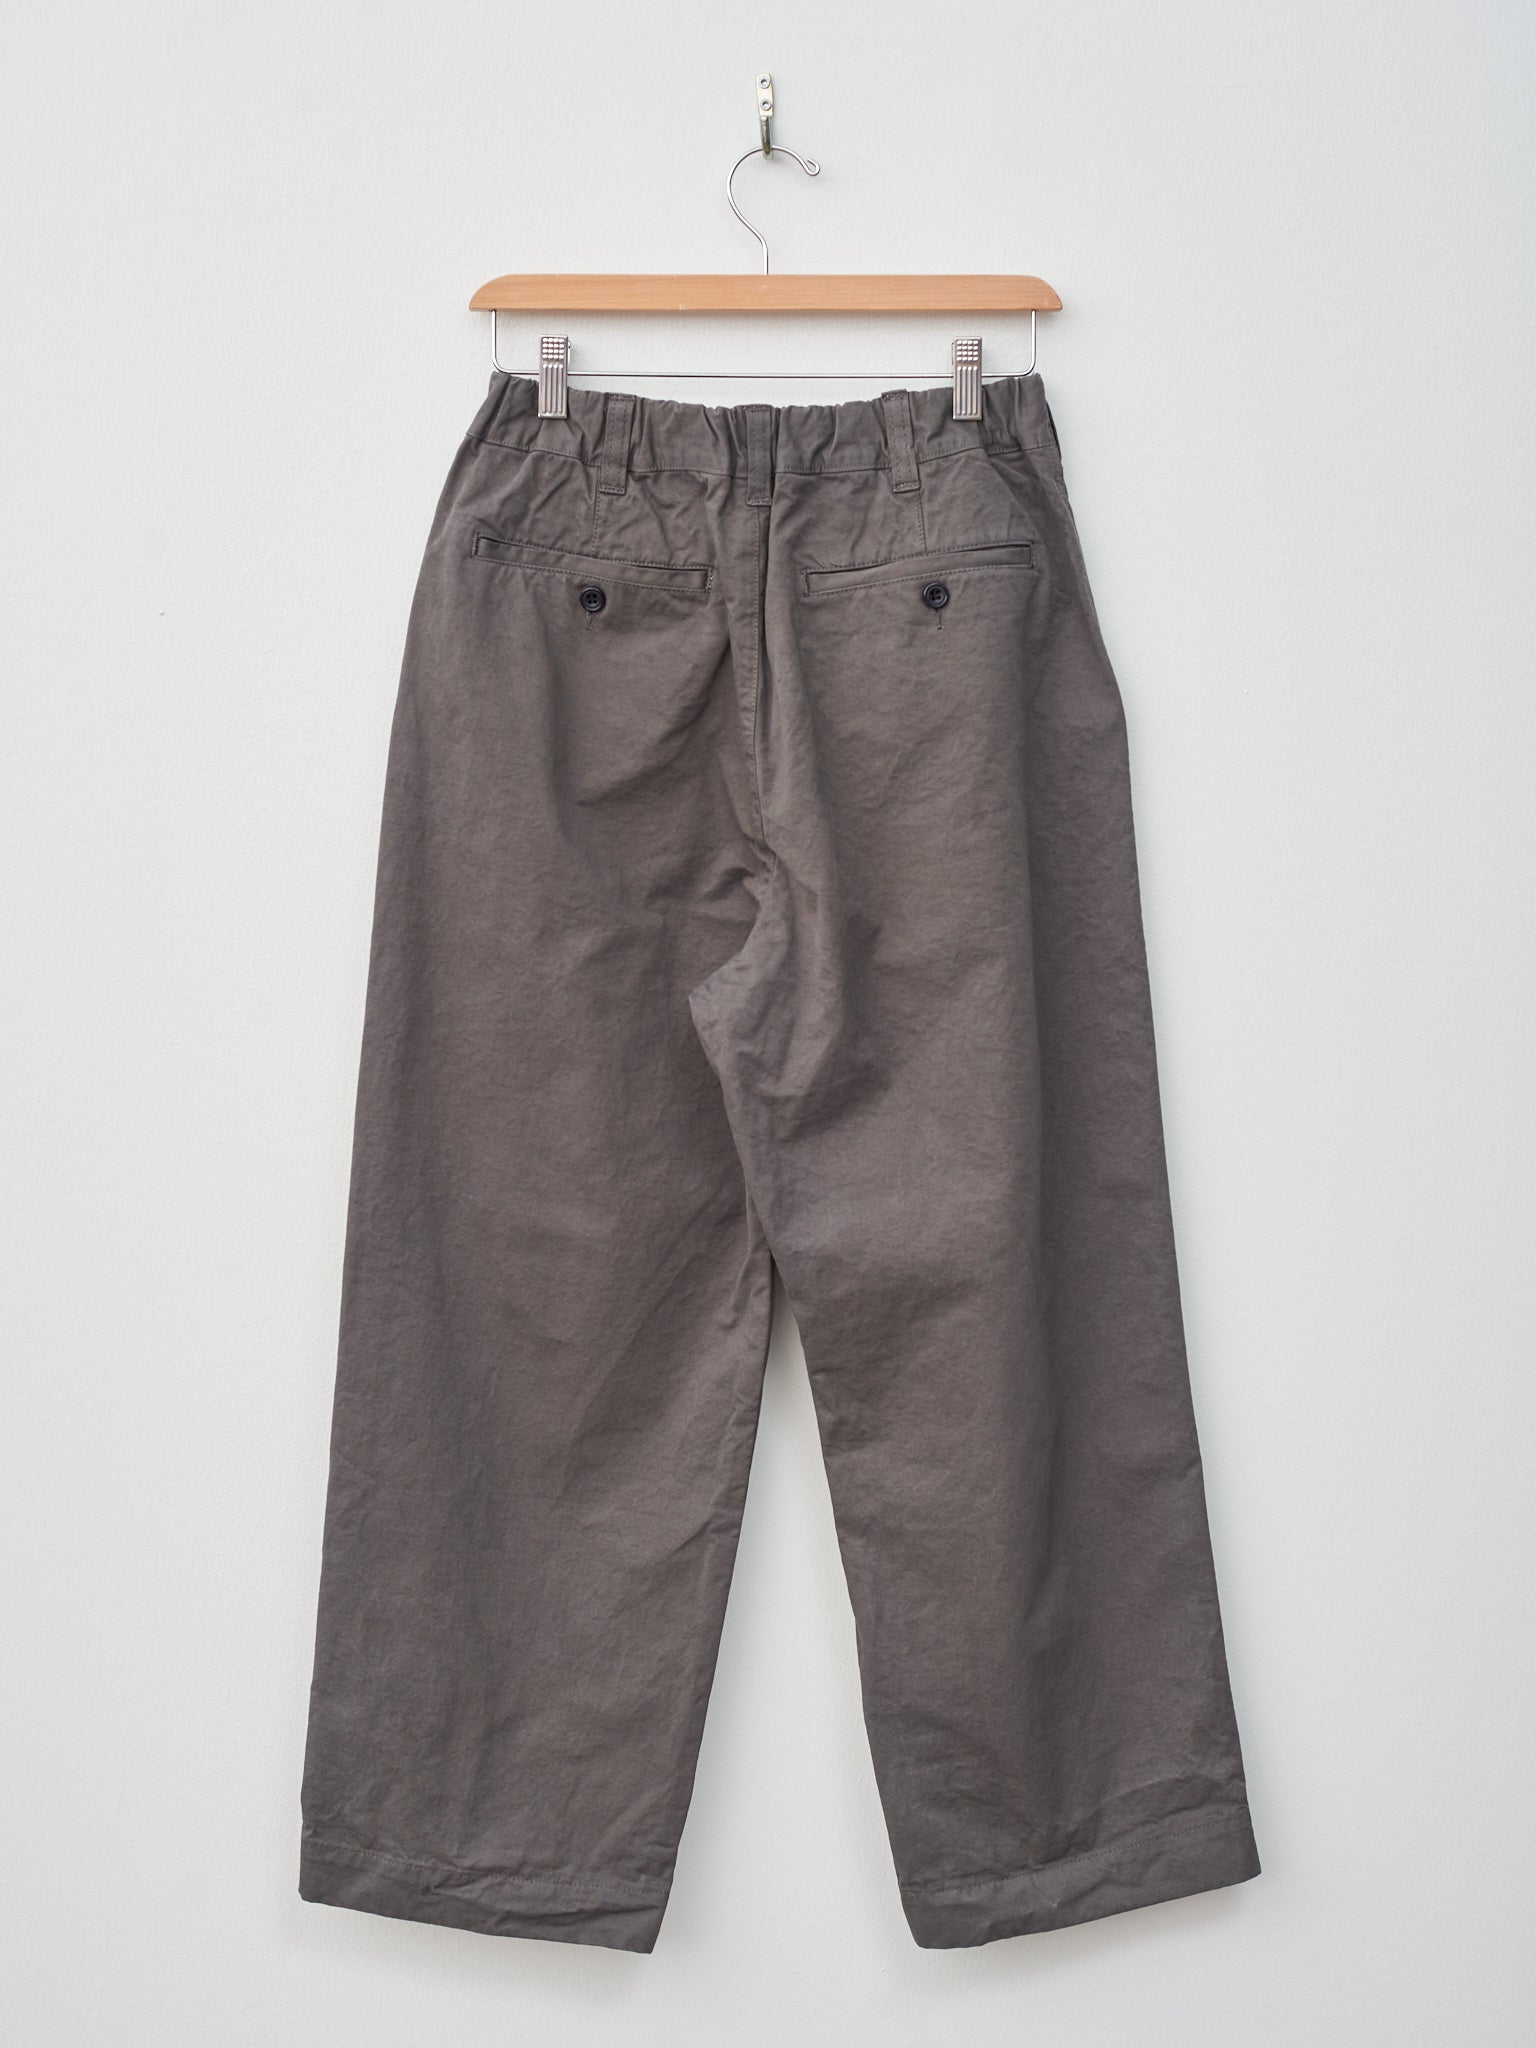 Namu Shop - Veritecoeur Straight Tuck Pants - Gray